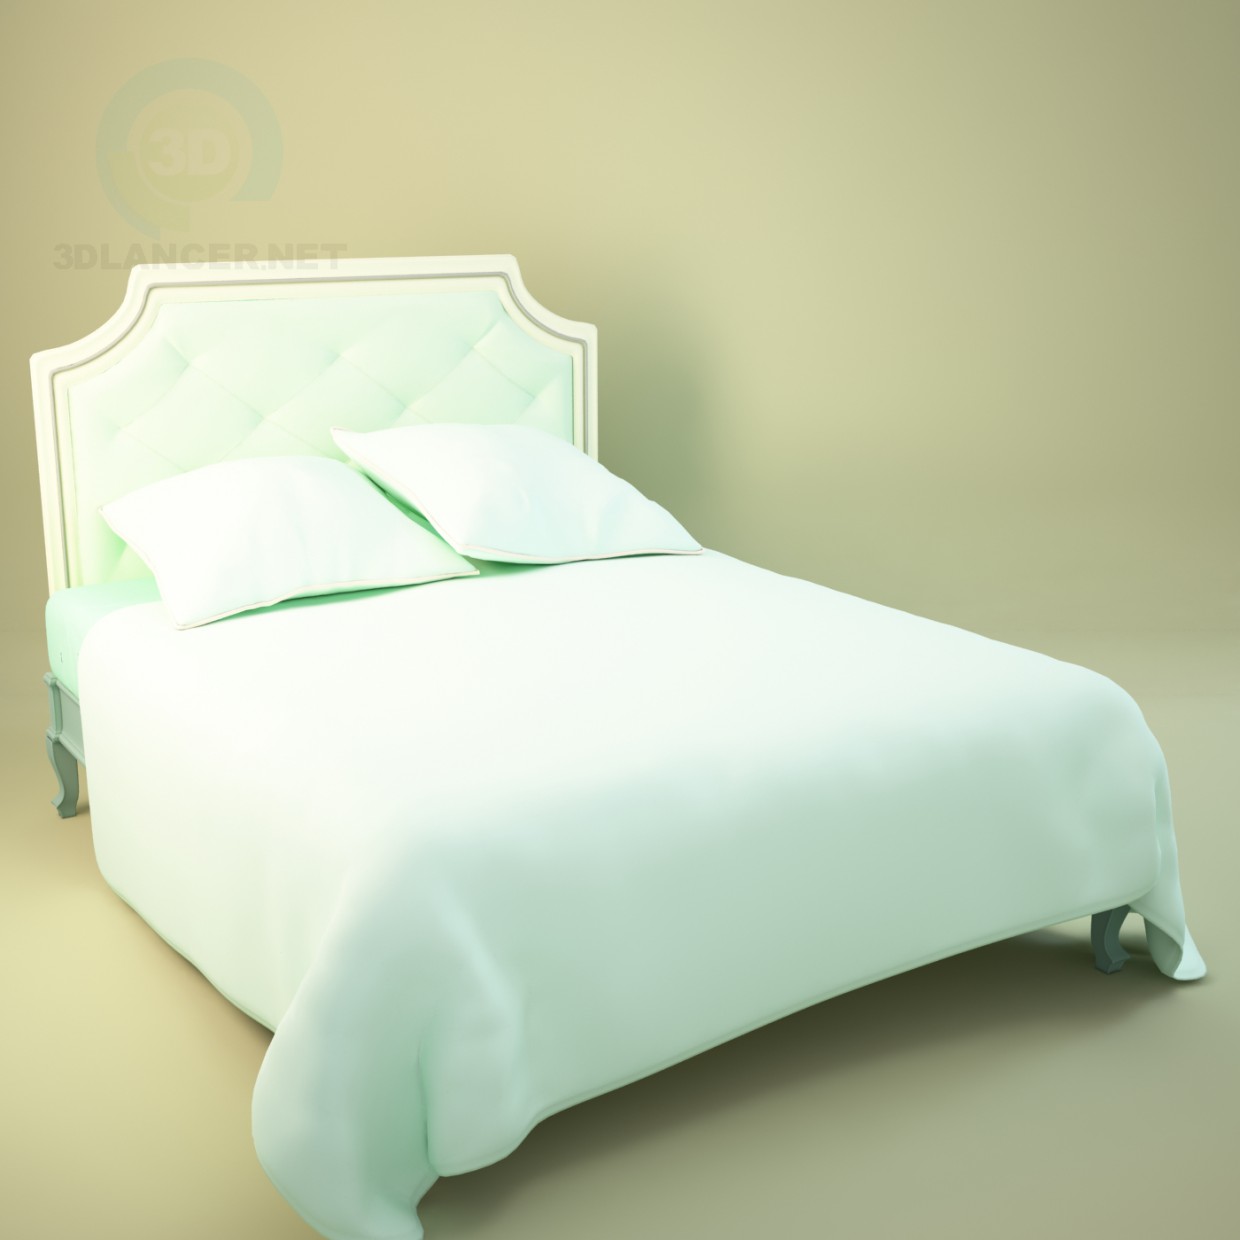 3d model cama clásica - vista previa